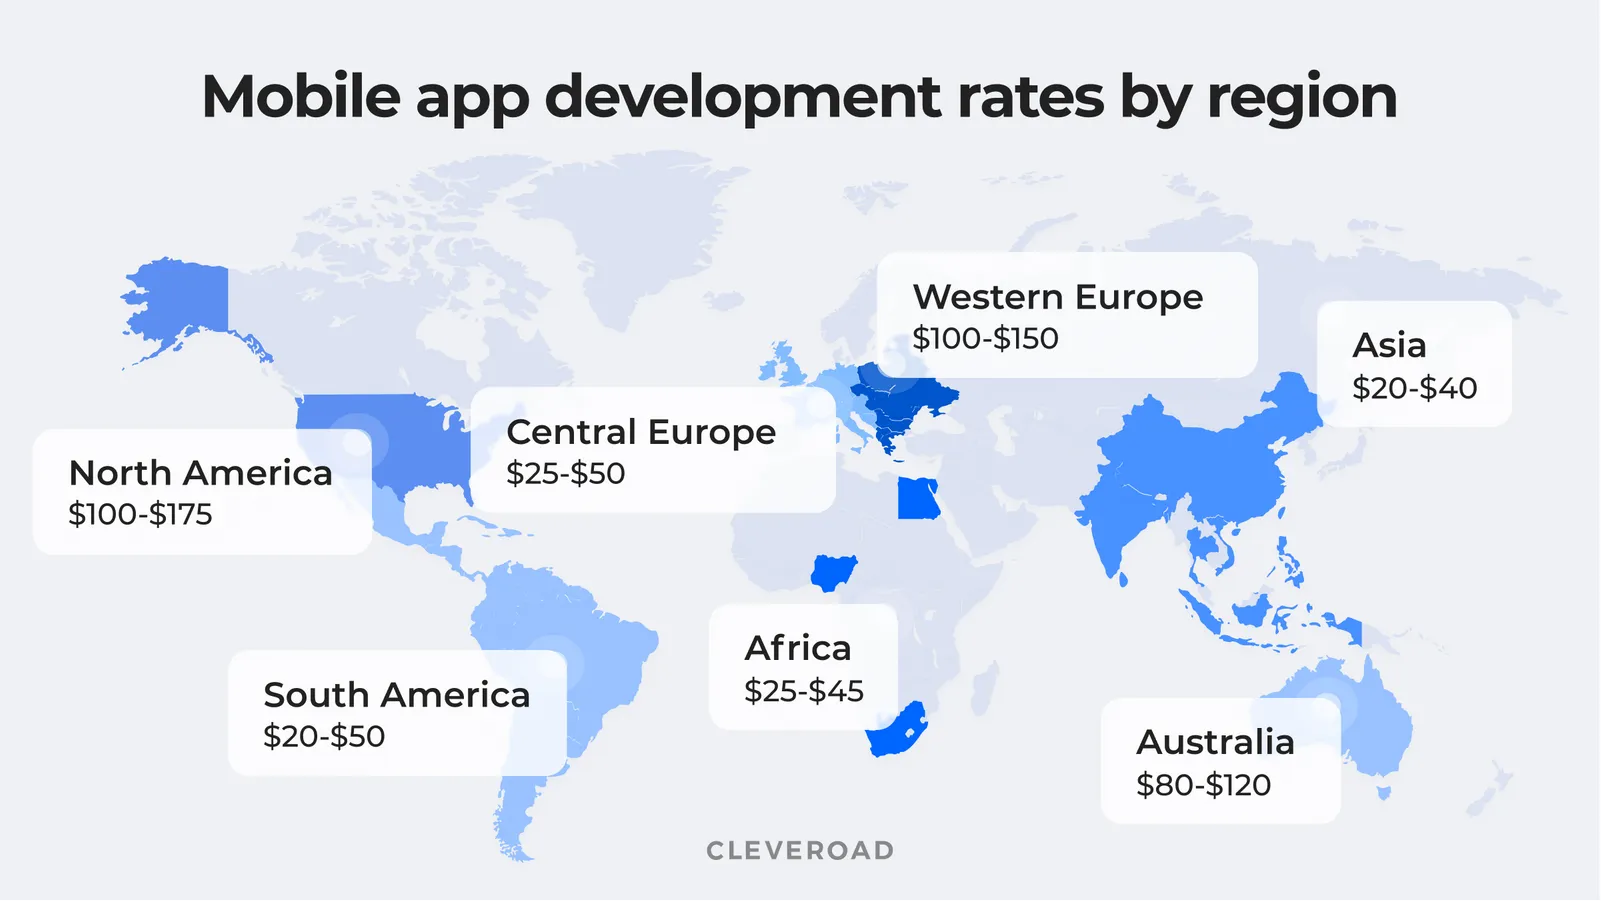 Mobile app development rates by region